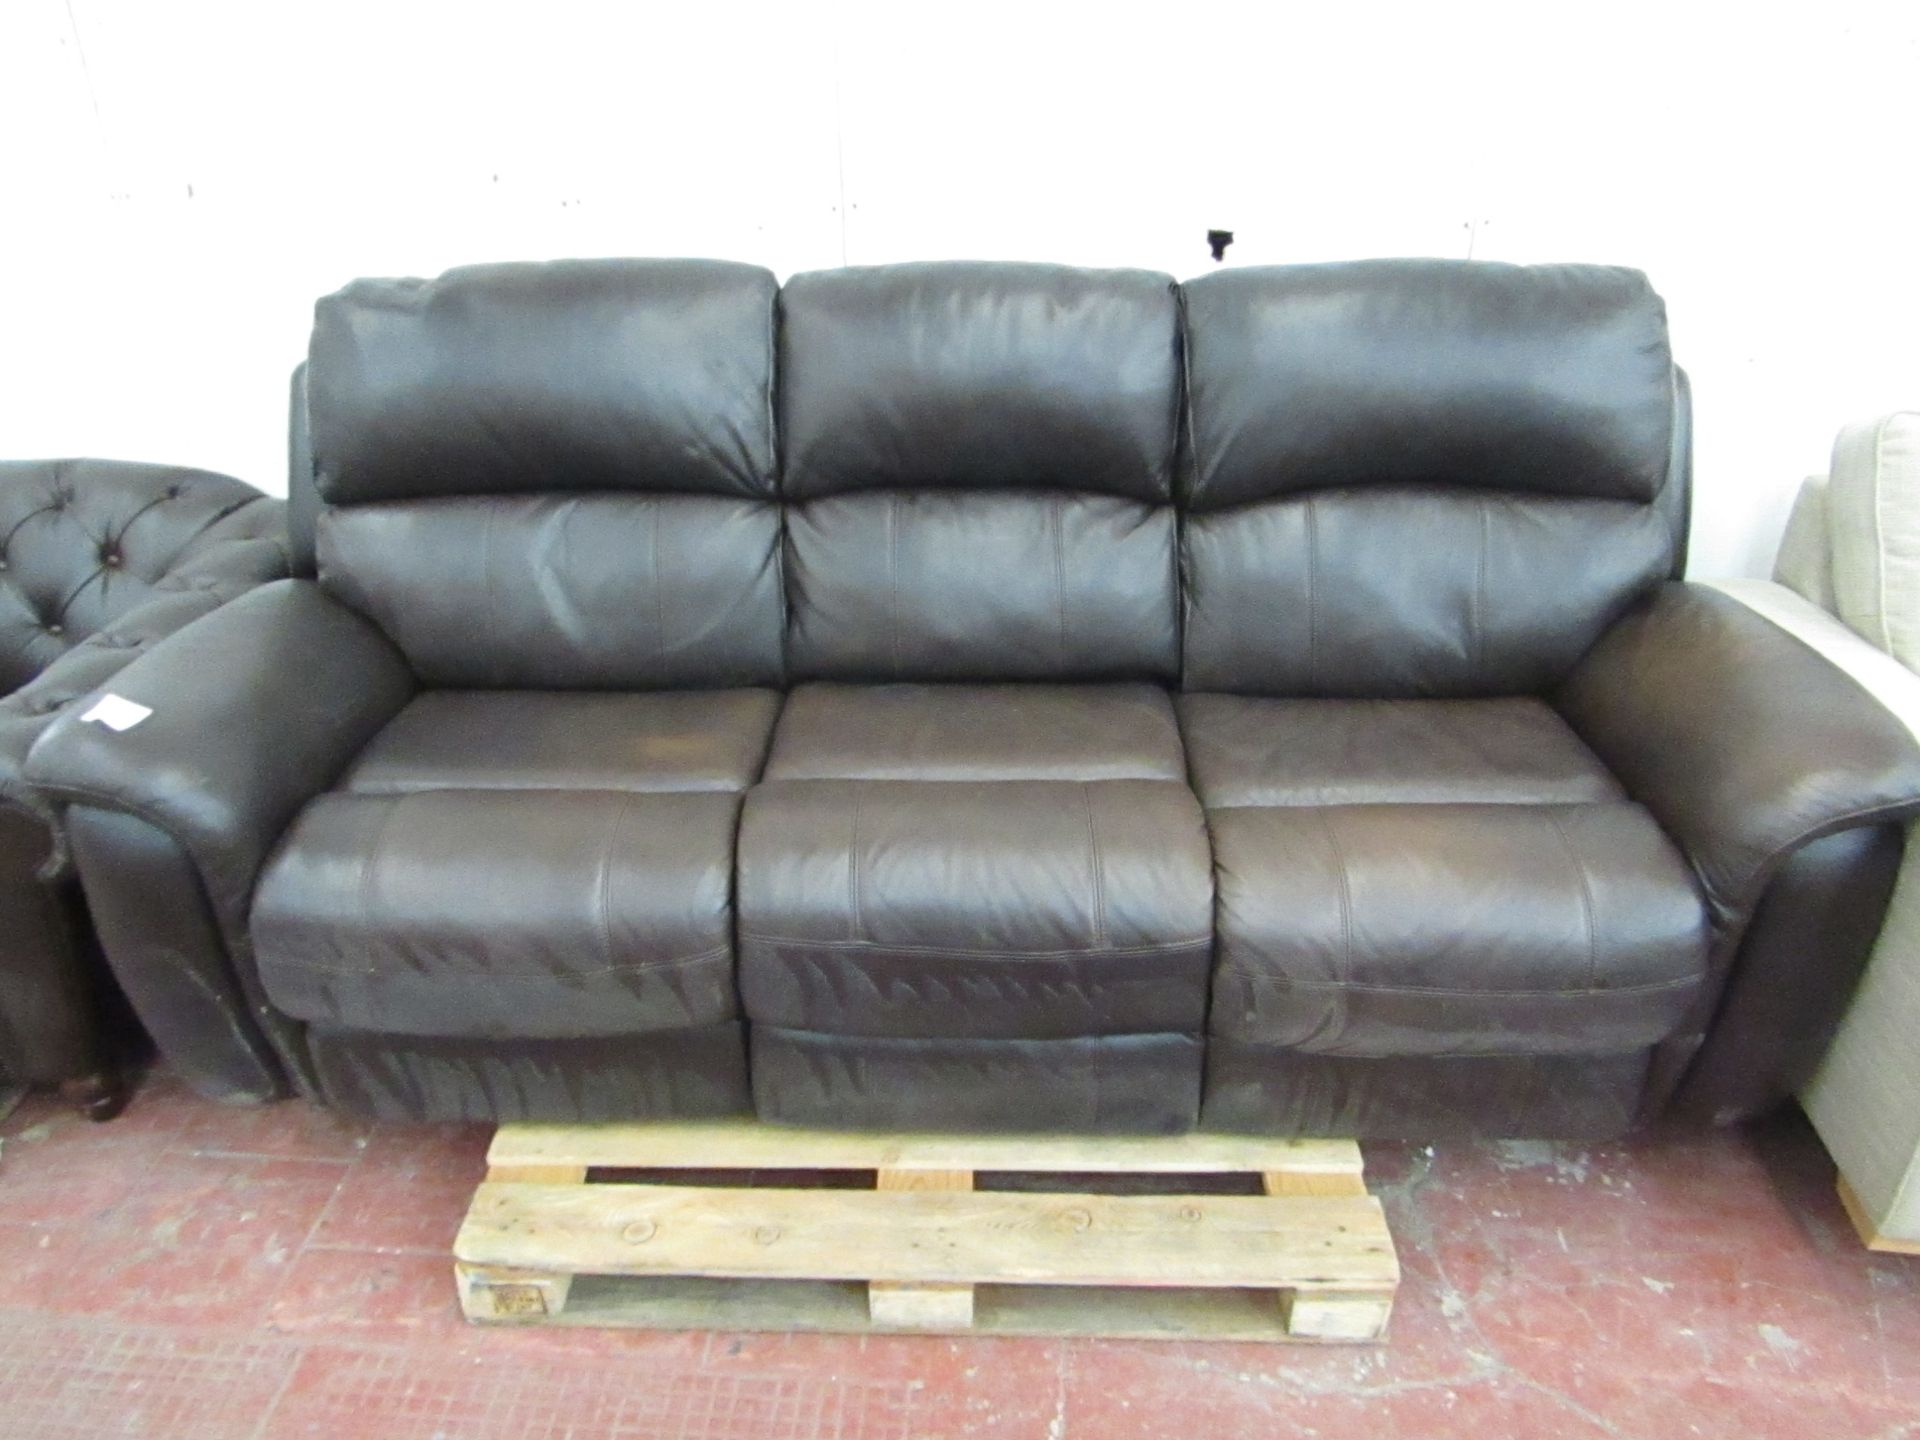 Polaski 3 seater manual reclining sofa, mechanism working